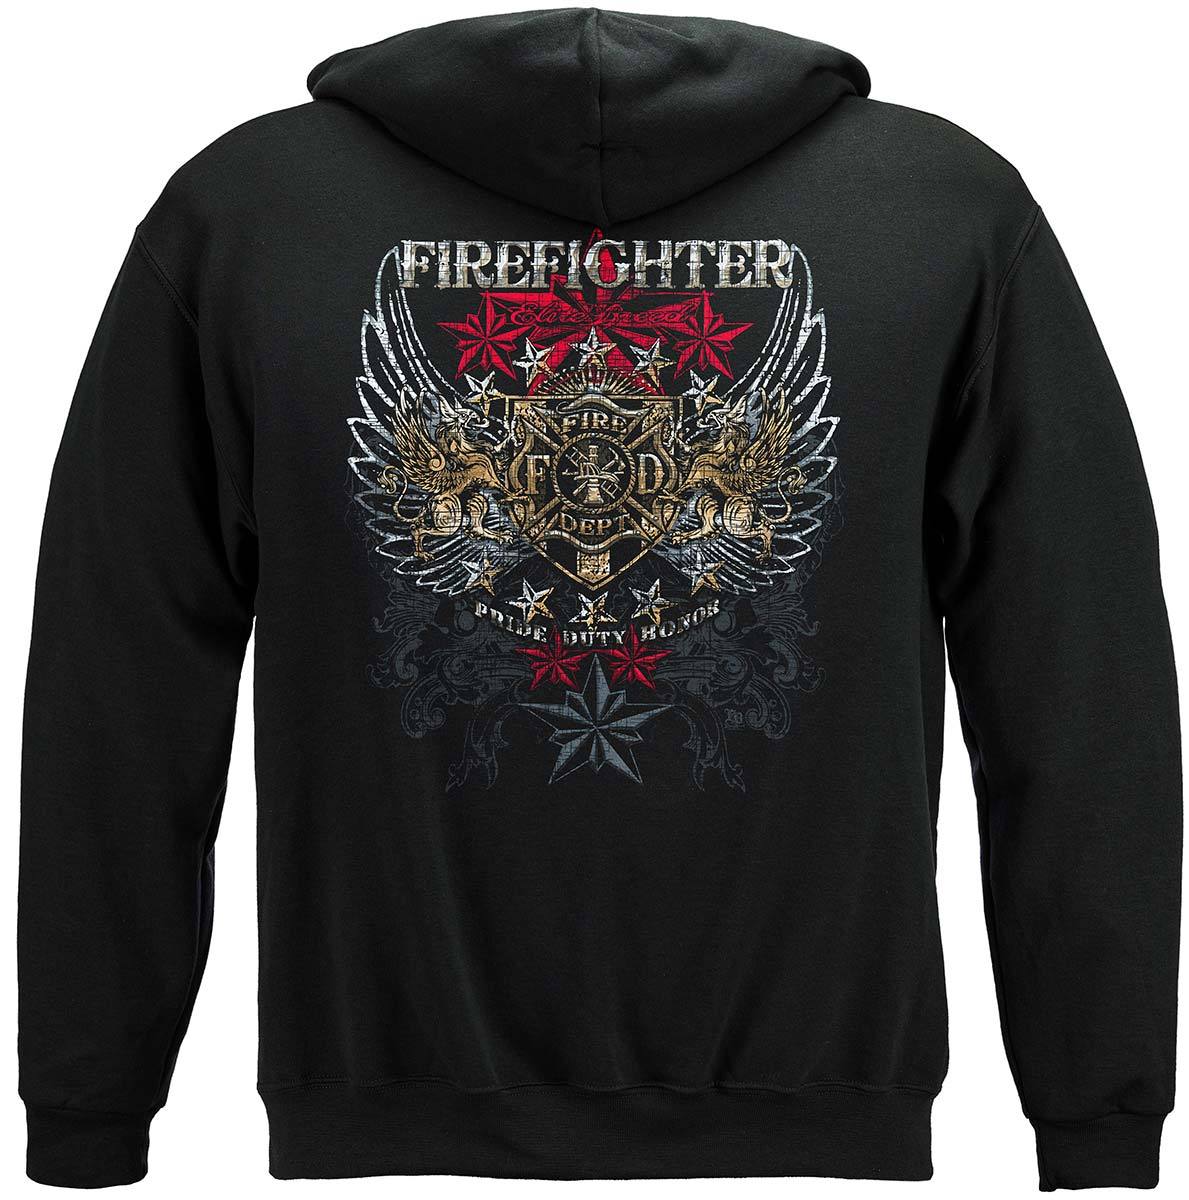 Elite Breed Firefighter Pride Duty Honor Silver Foil Premium Hooded Sweat Shirt